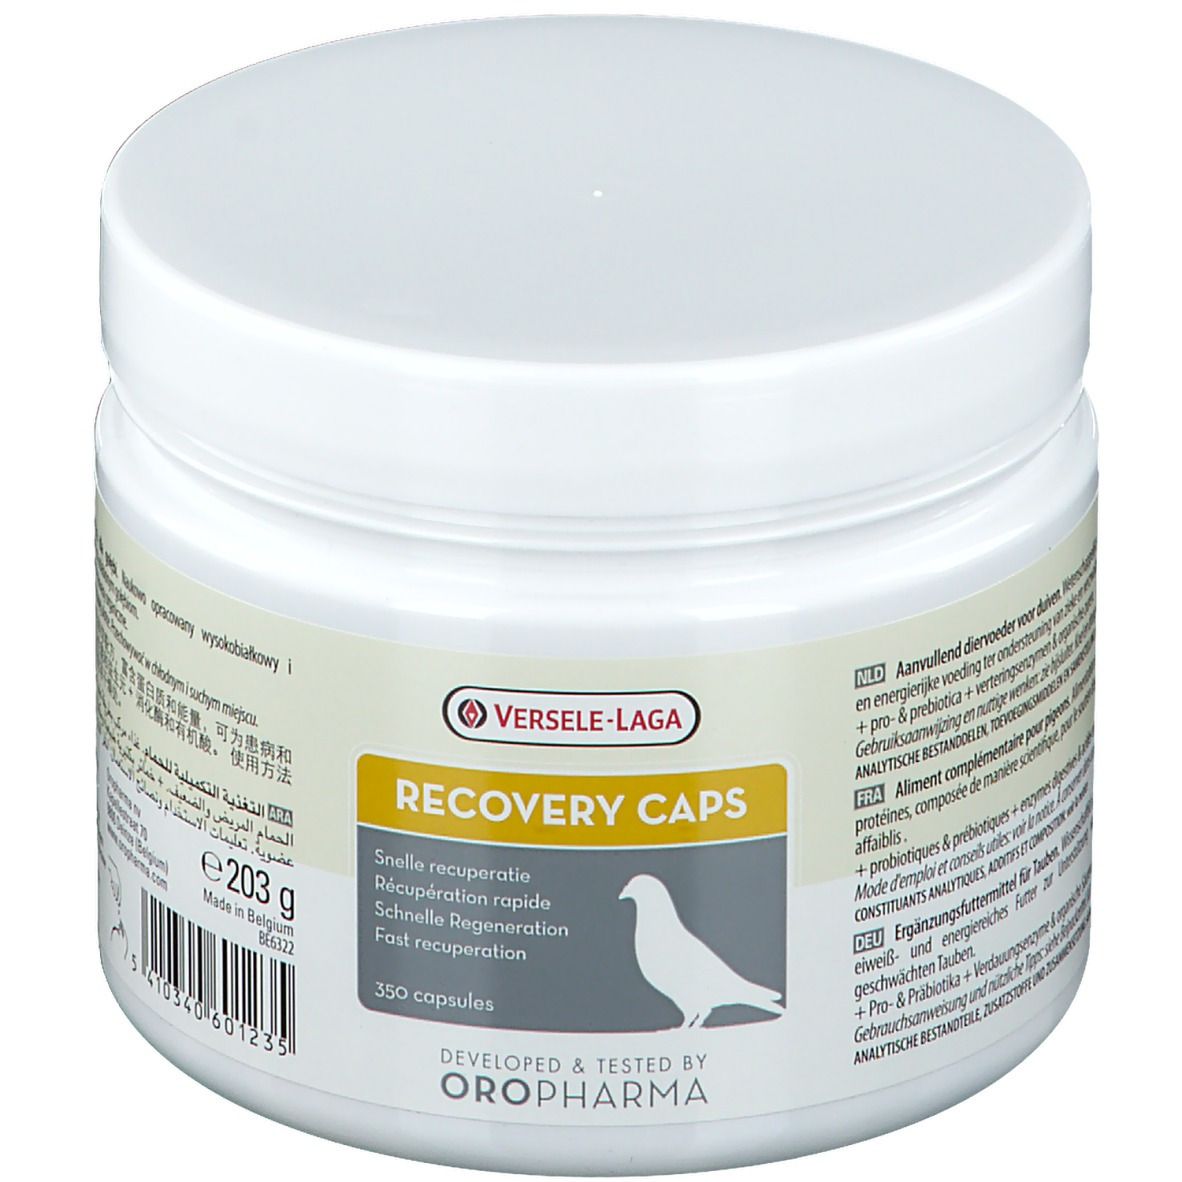 OROPHARMA Recovery Caps